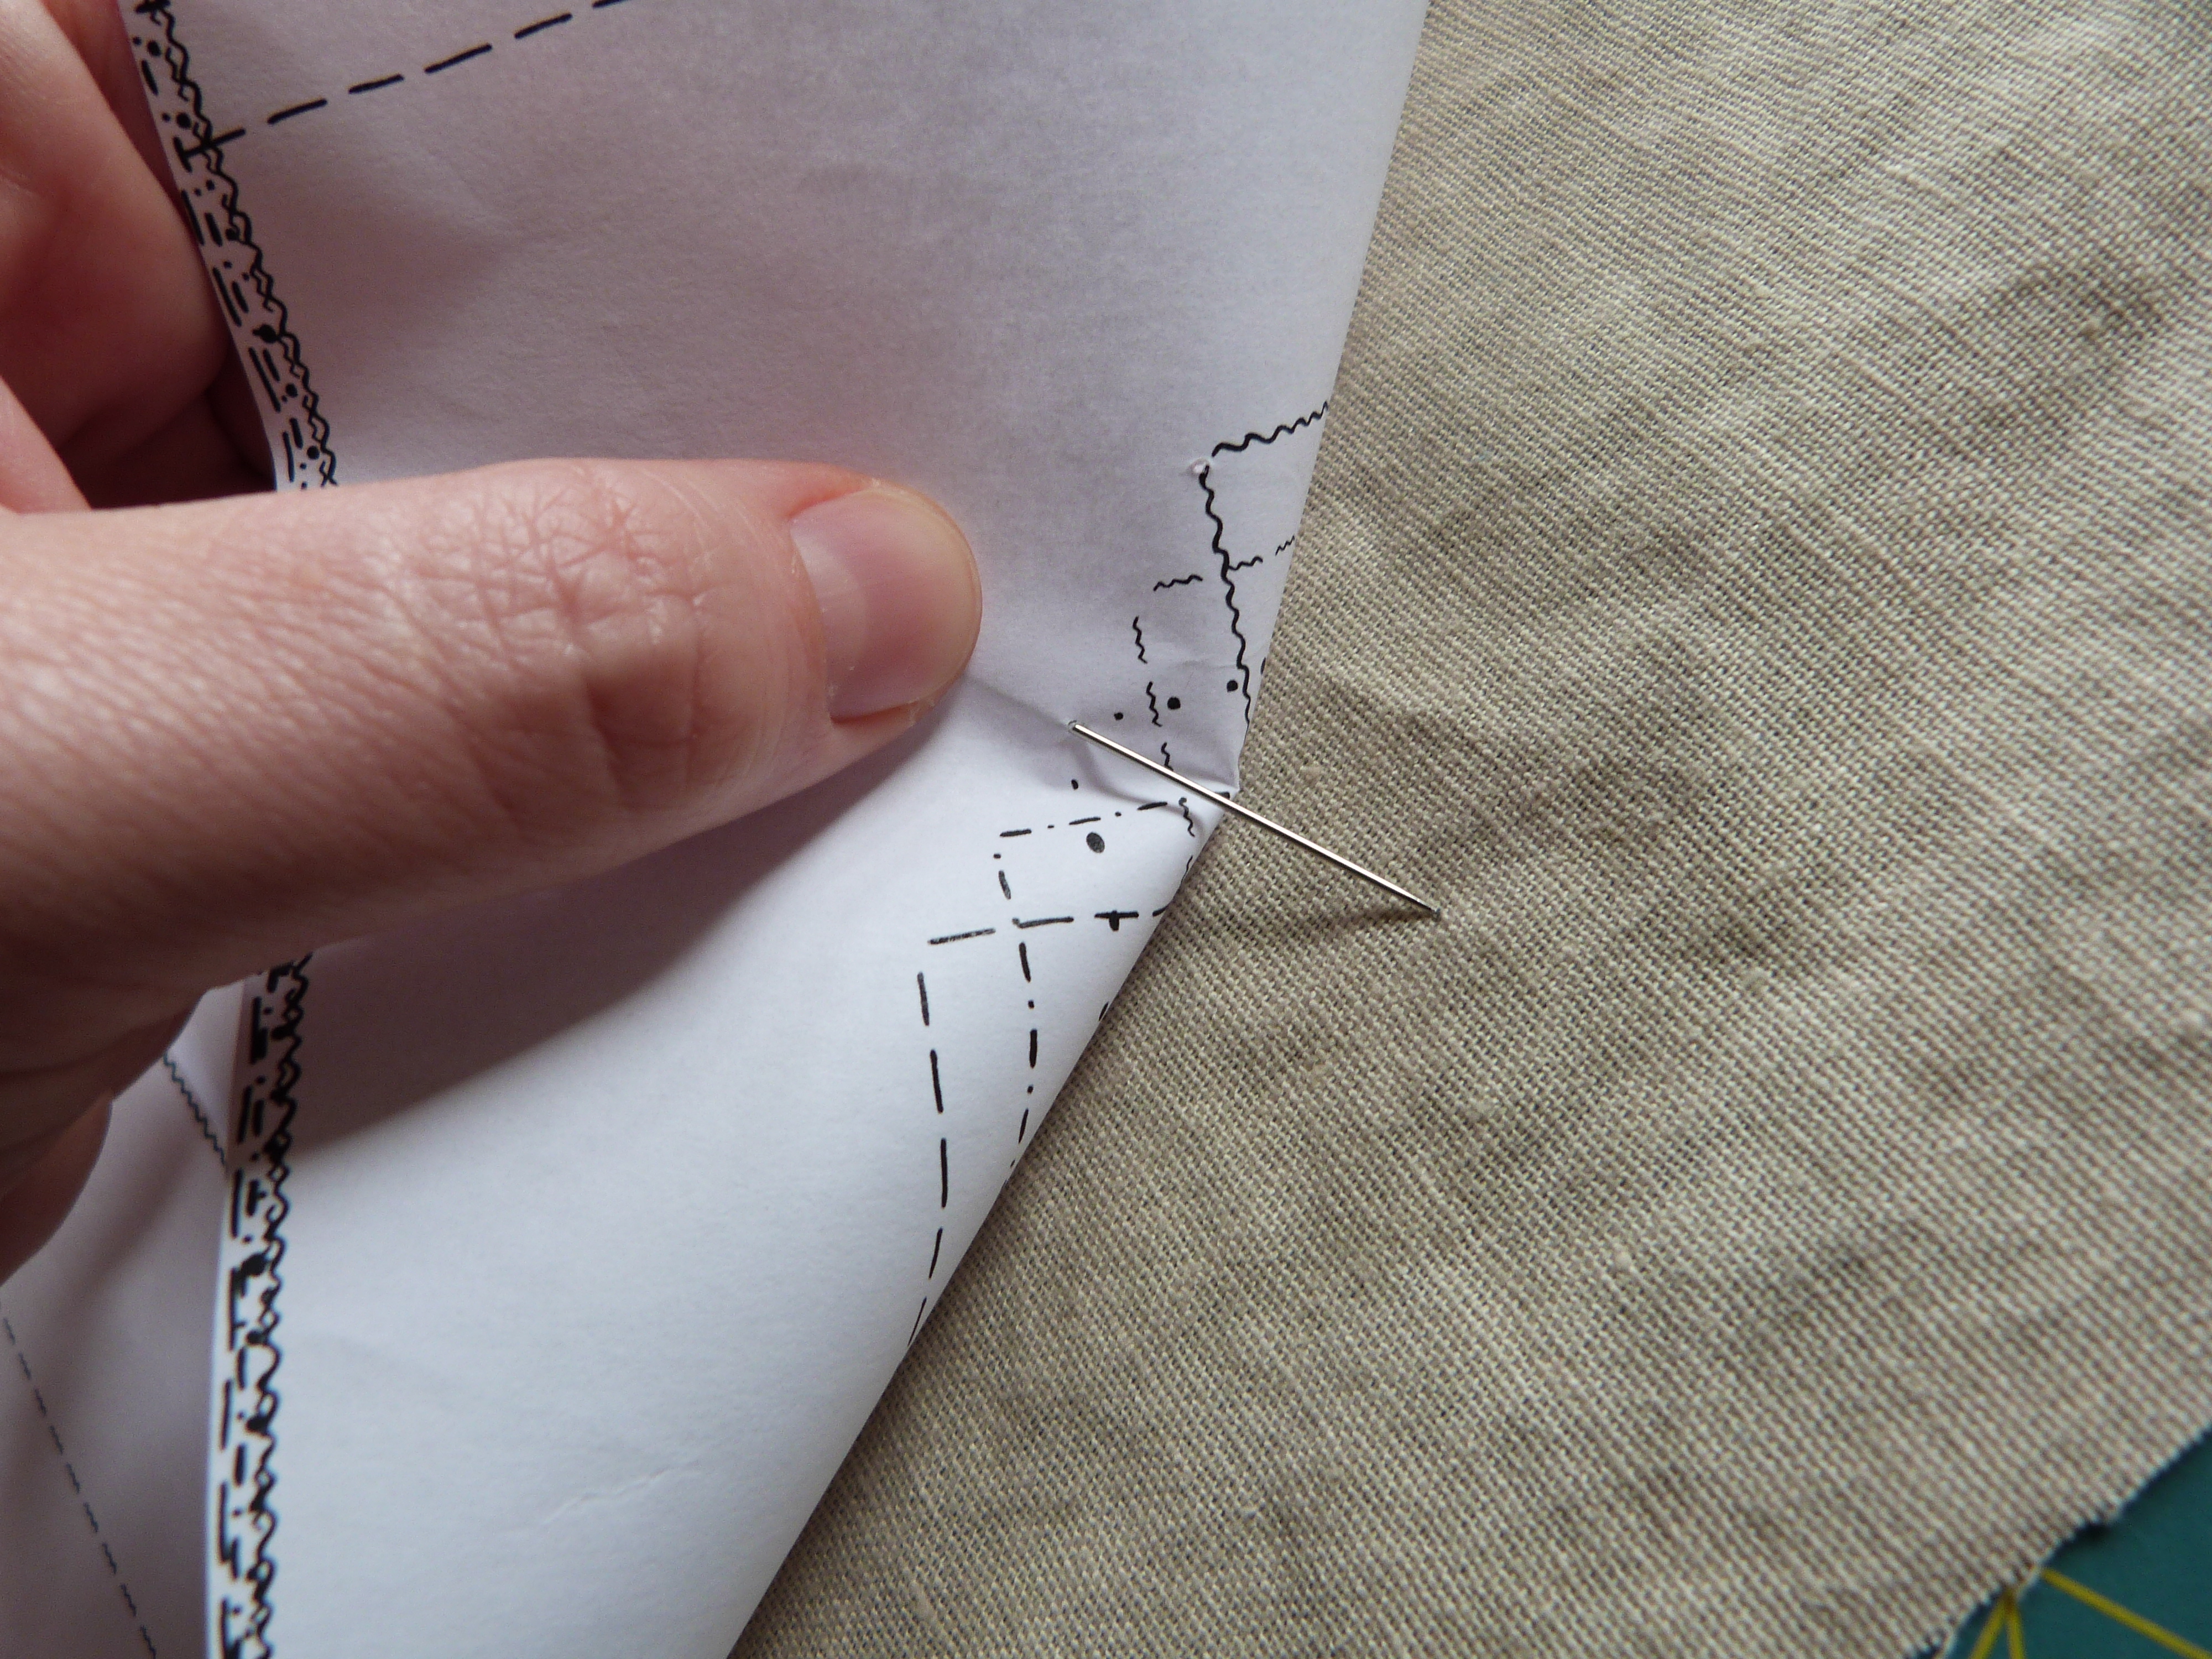 File:Two threads threaded sewing machine.jpg - Wikipedia